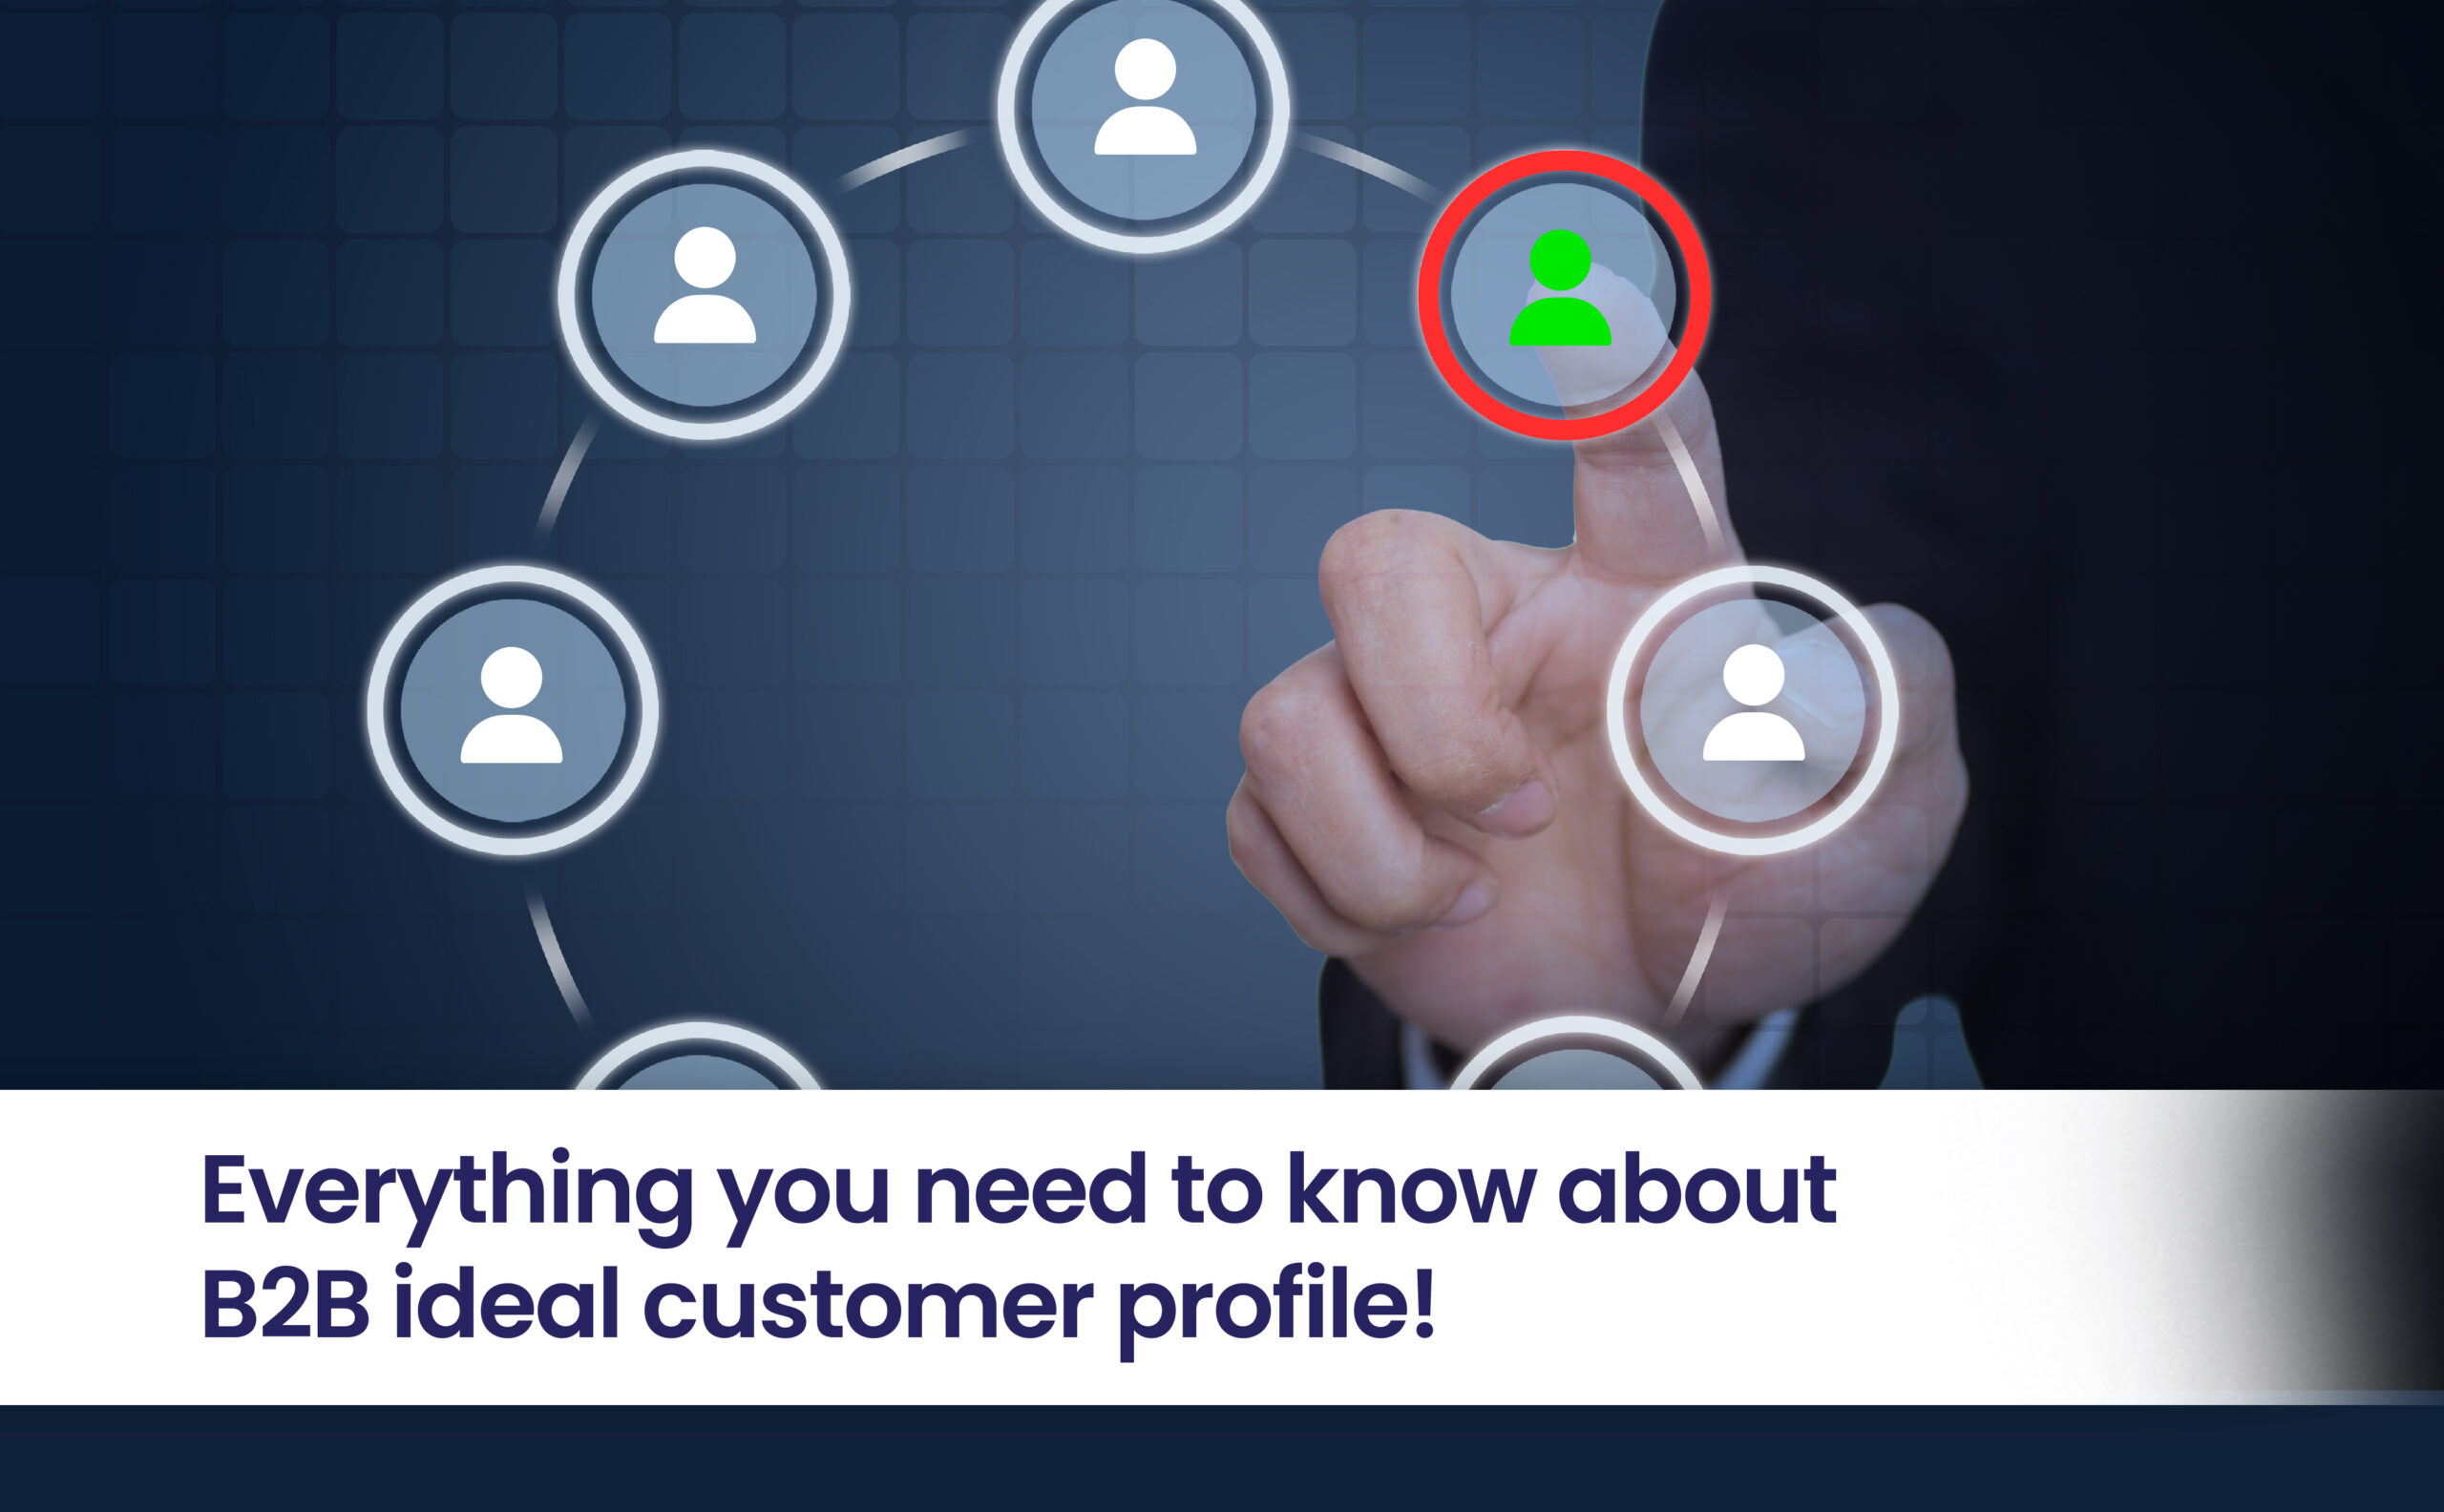 B2B ideal customer profile